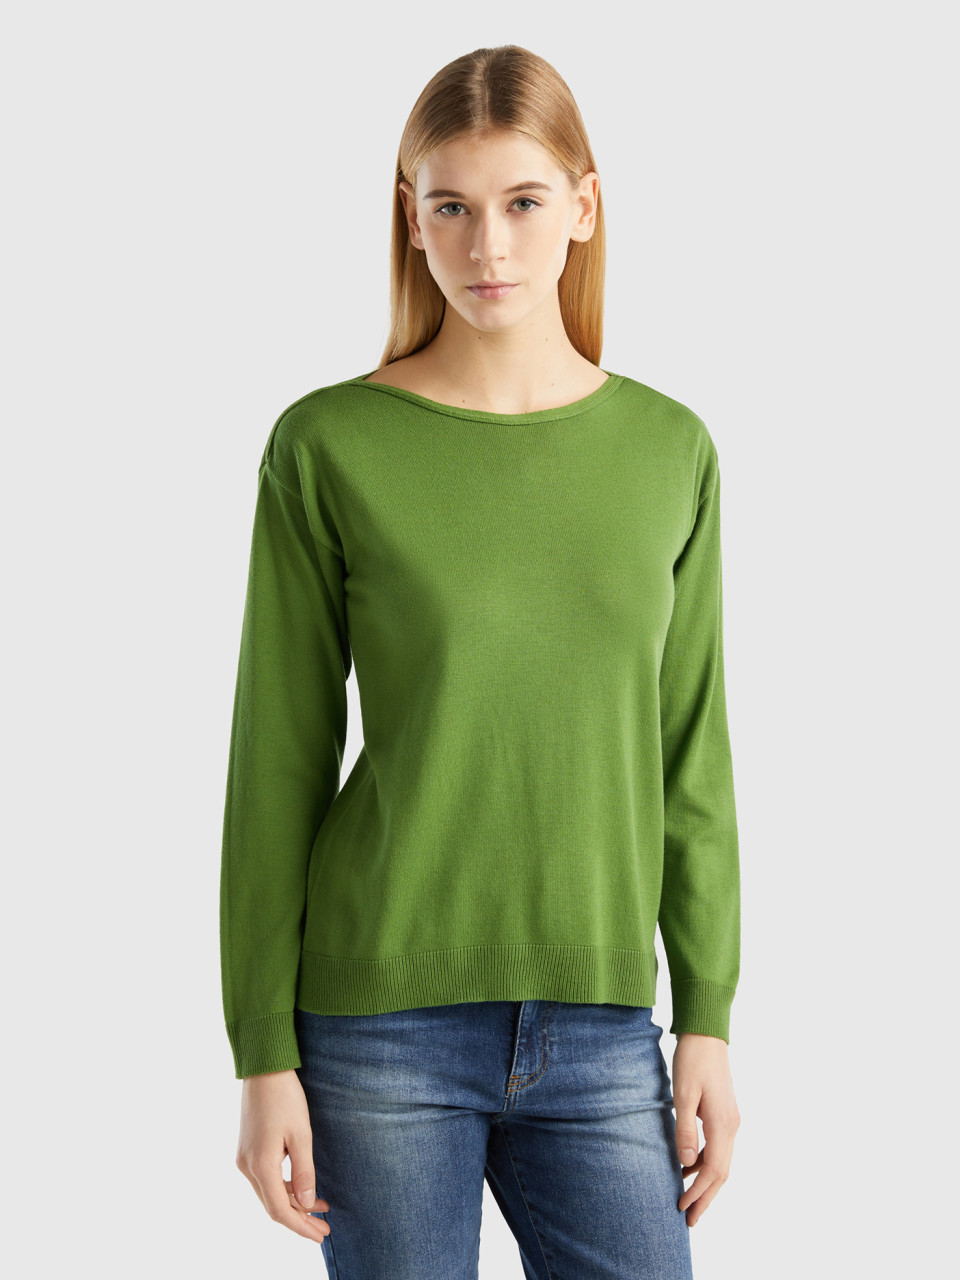 Benetton, Boat Neck Sweater, Military Green, Women